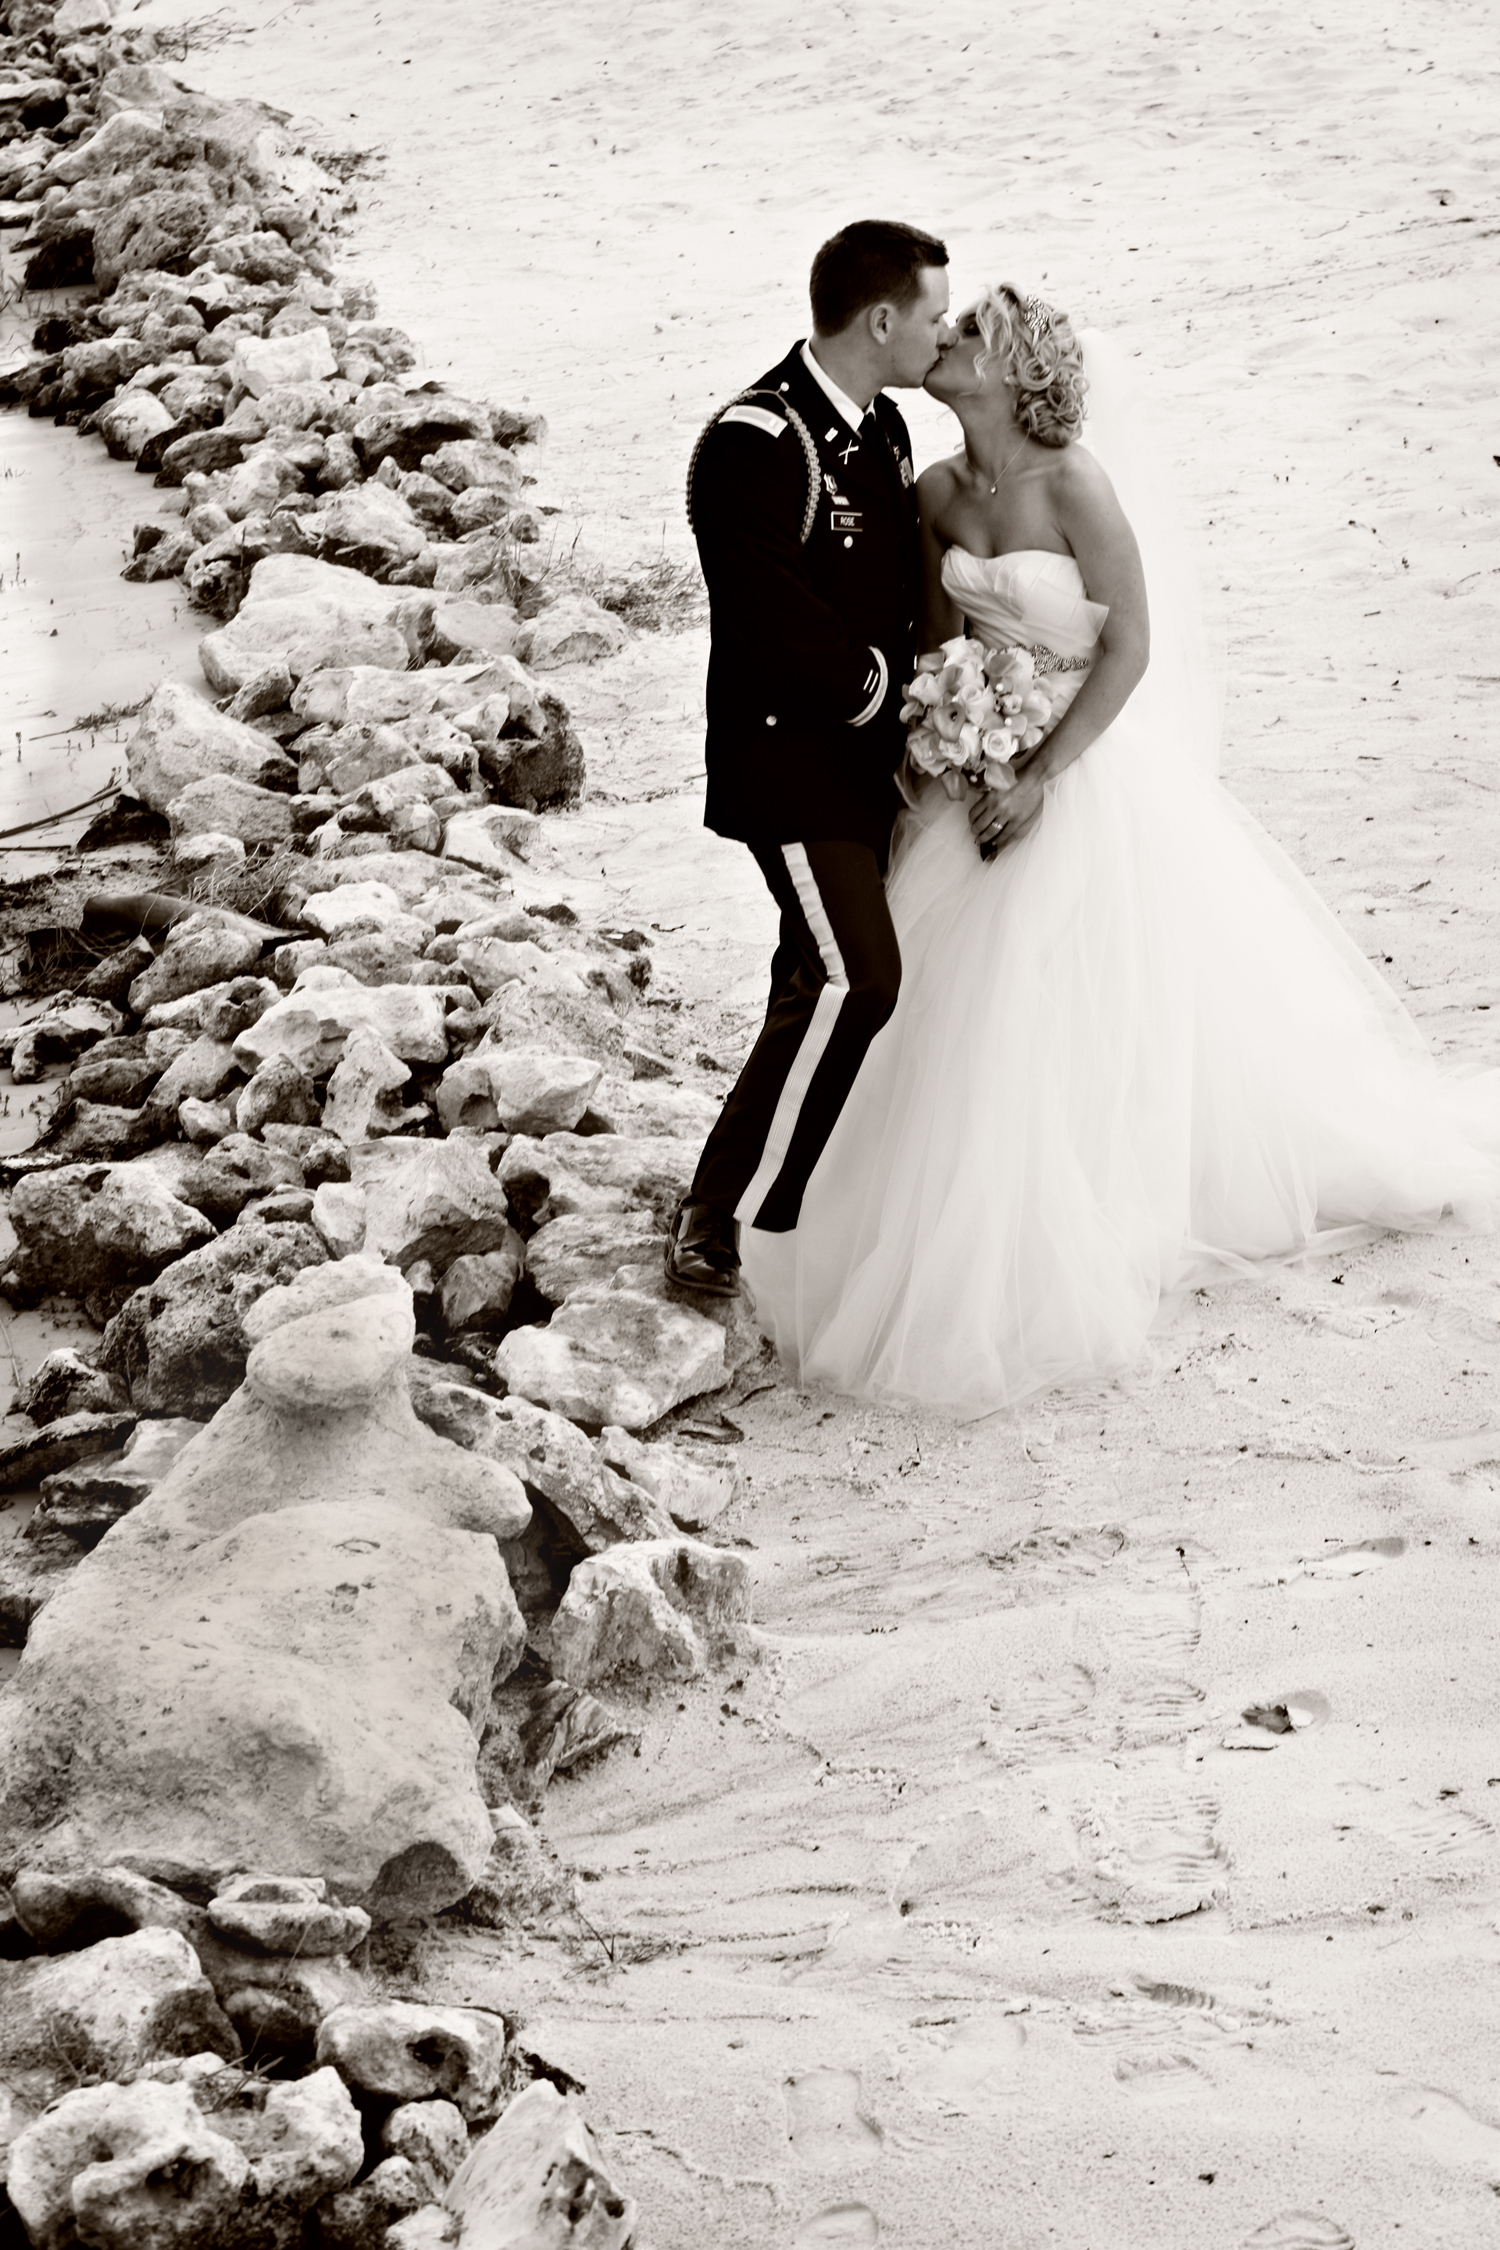 Rick-Ferro-Wedding-Couple-Beach-Rocks.jpg